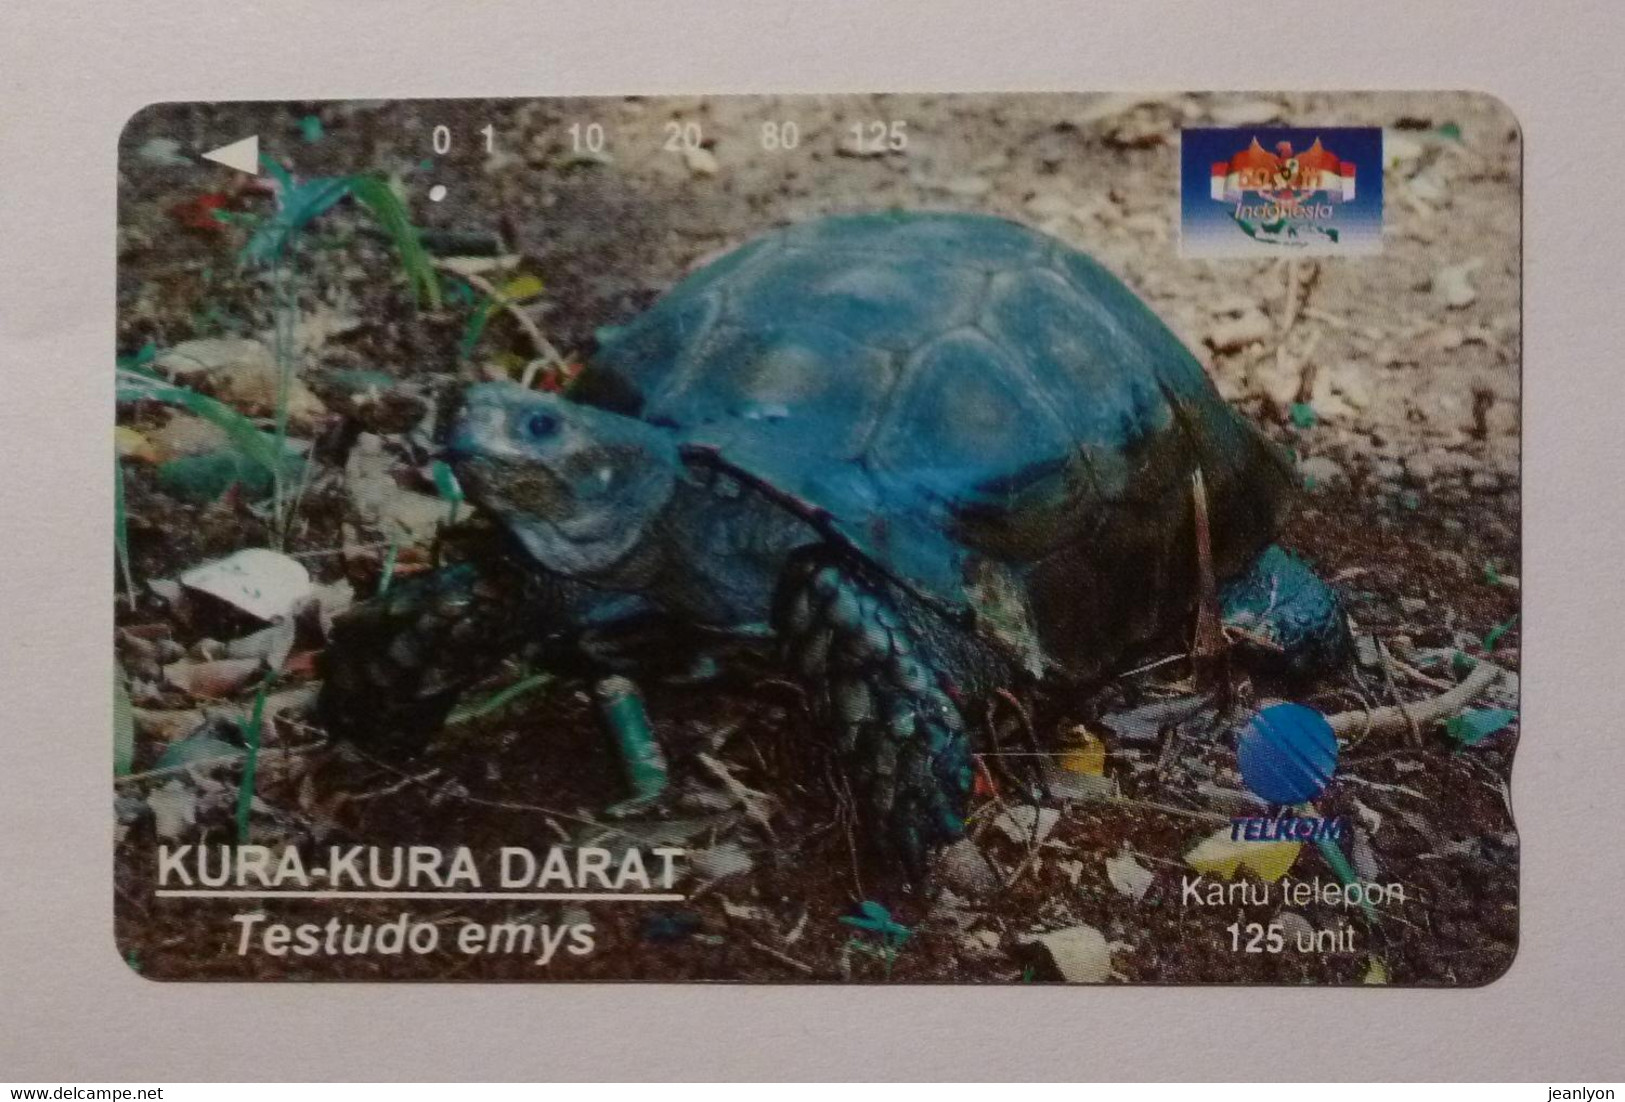 TORTUE - KURA KURA DARAT - TESTUDO EMYS - INDONEDIE - Carte Téléphone TELKOM / Phonecard INDONESIA - Turtles